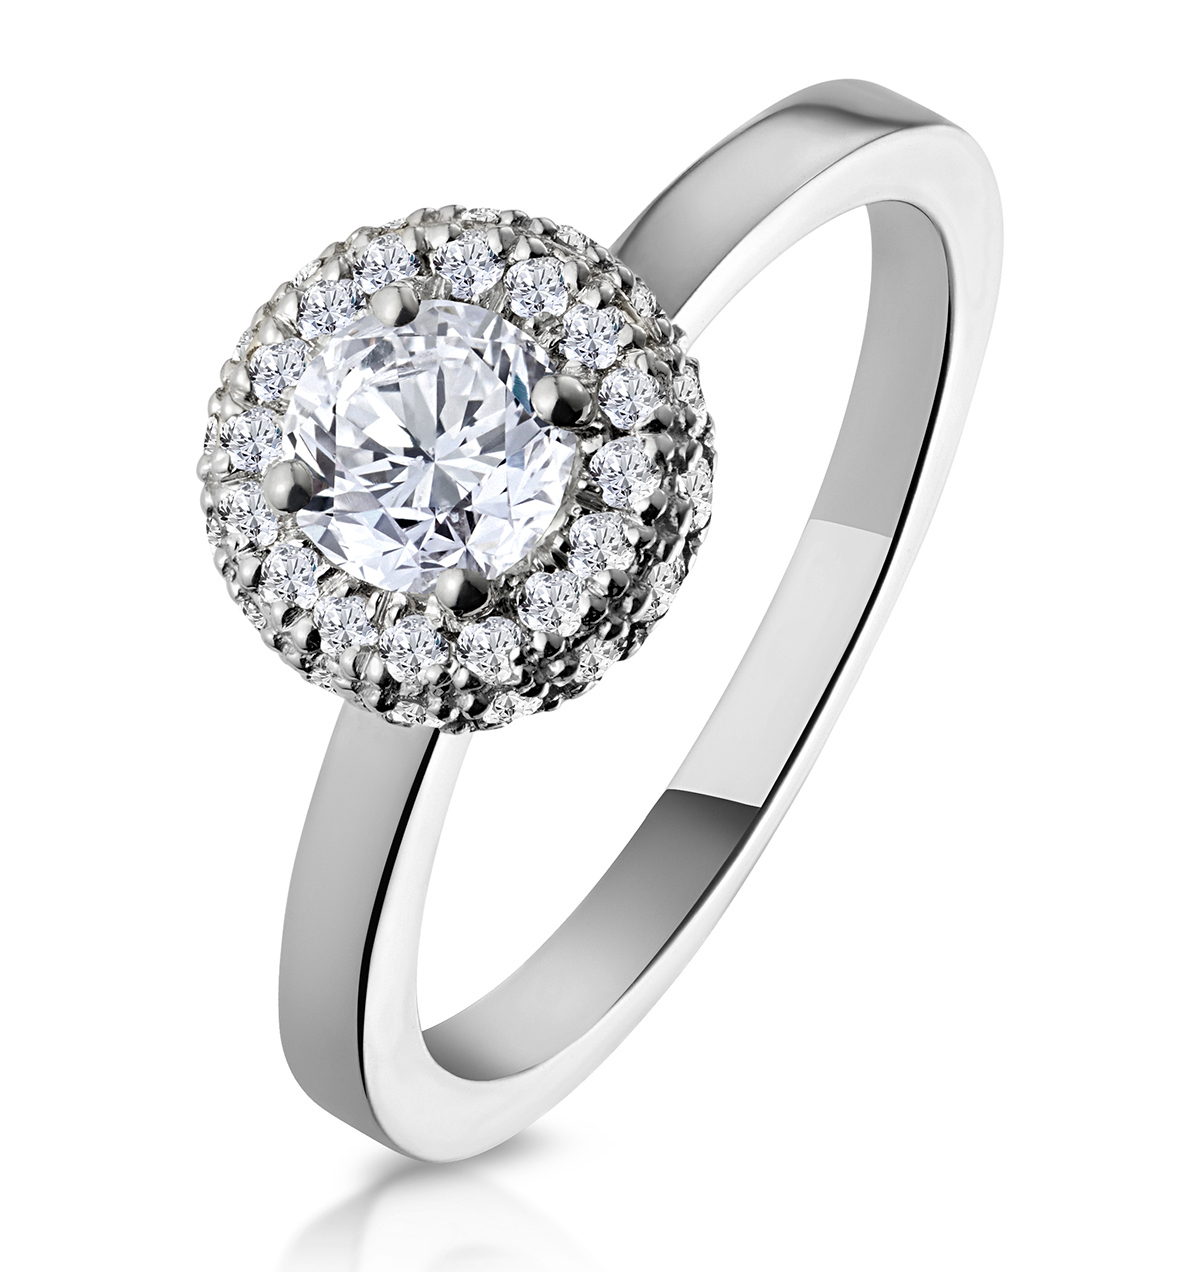 Eleanor Diamond Halo Engagement Ring 18K White Gold 0.65ct G/SI2